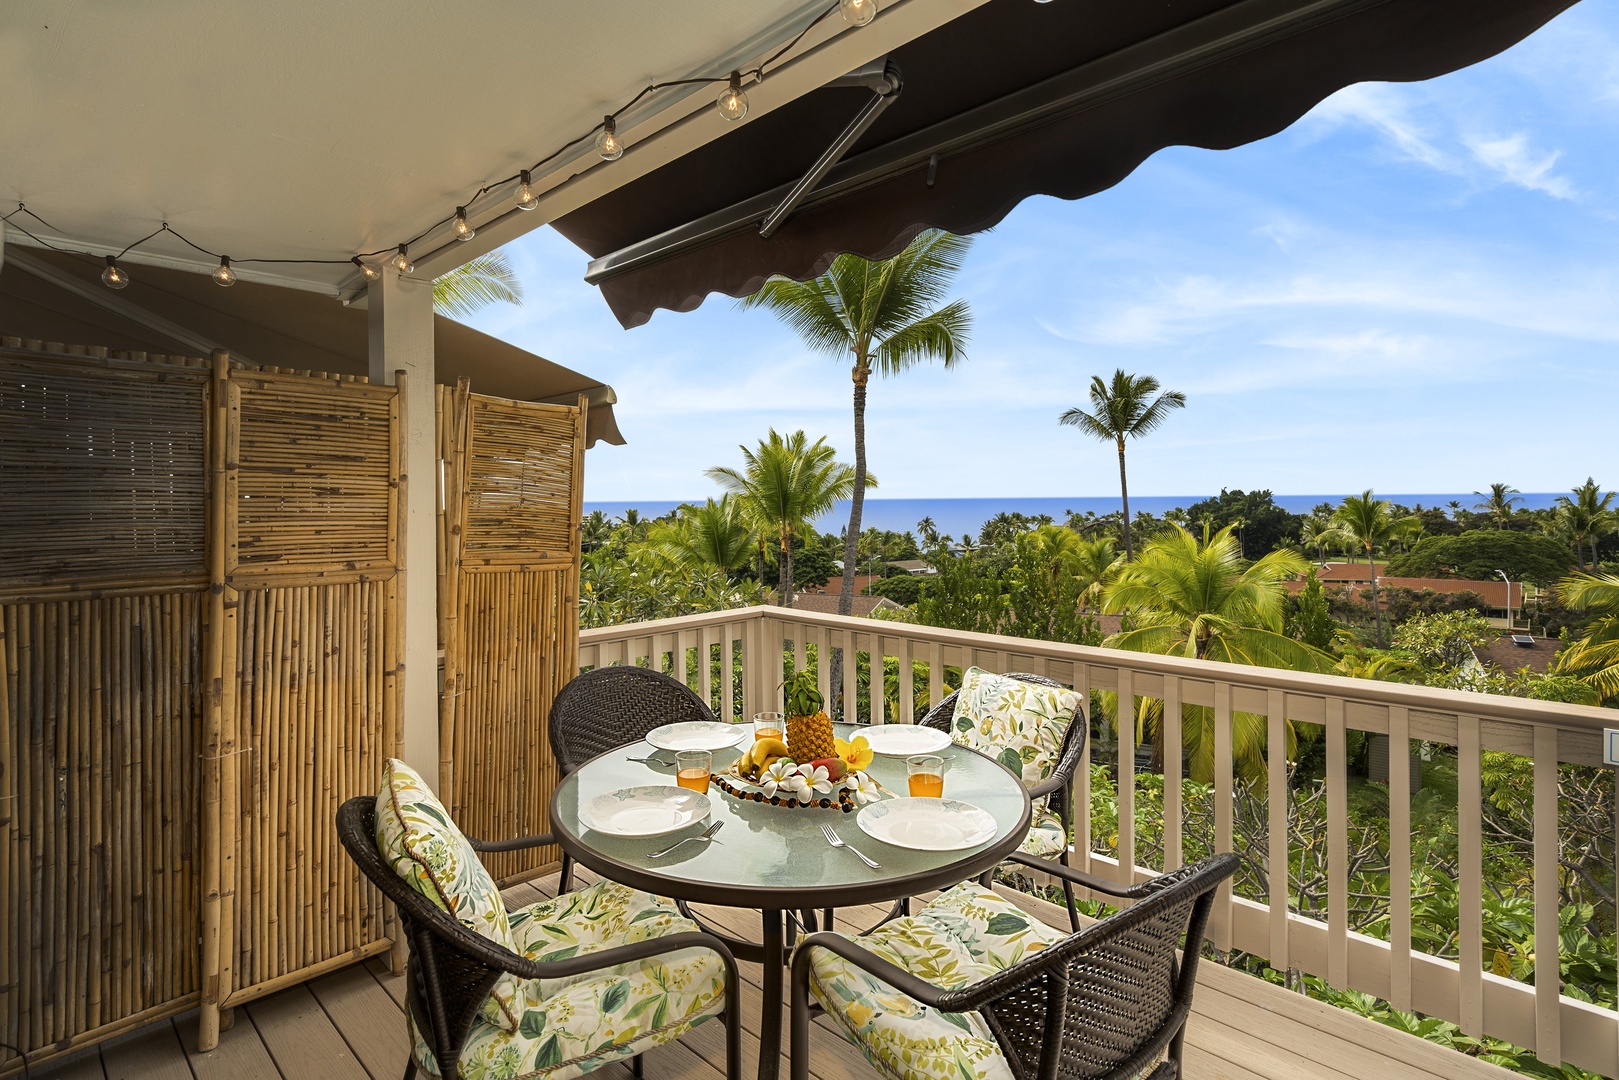 Kailua-Kona Vacation Rentals, Keauhou Resort 116 - Outdoor dining for 4!